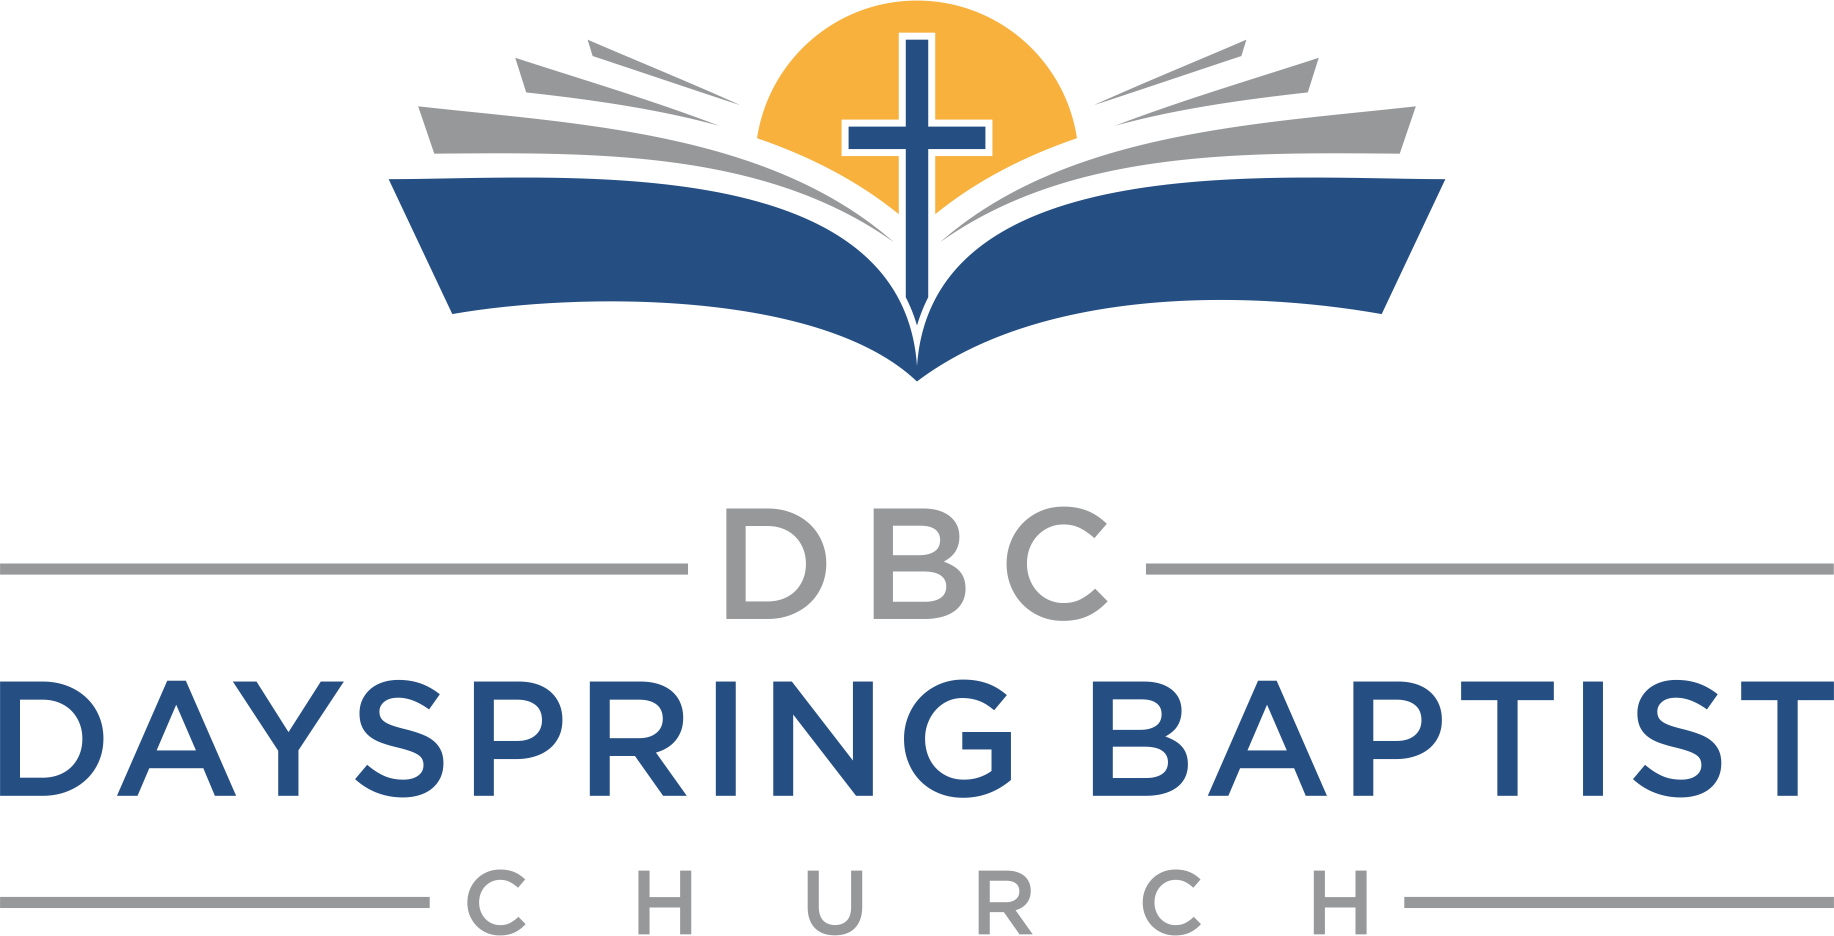 Copy of DBC Baptist1